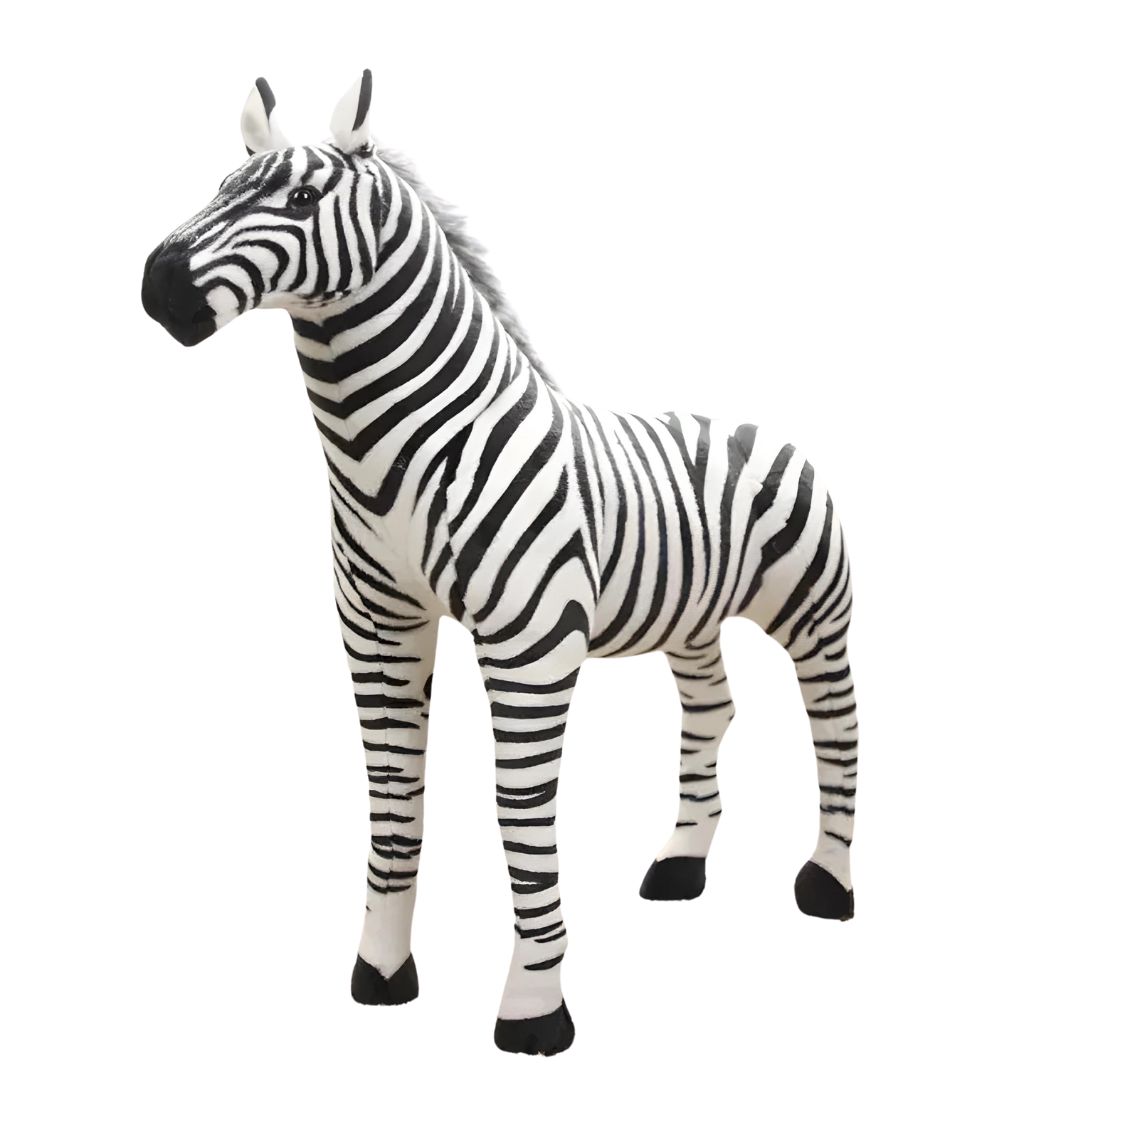 Zebra Safari Party Stuffed Animal